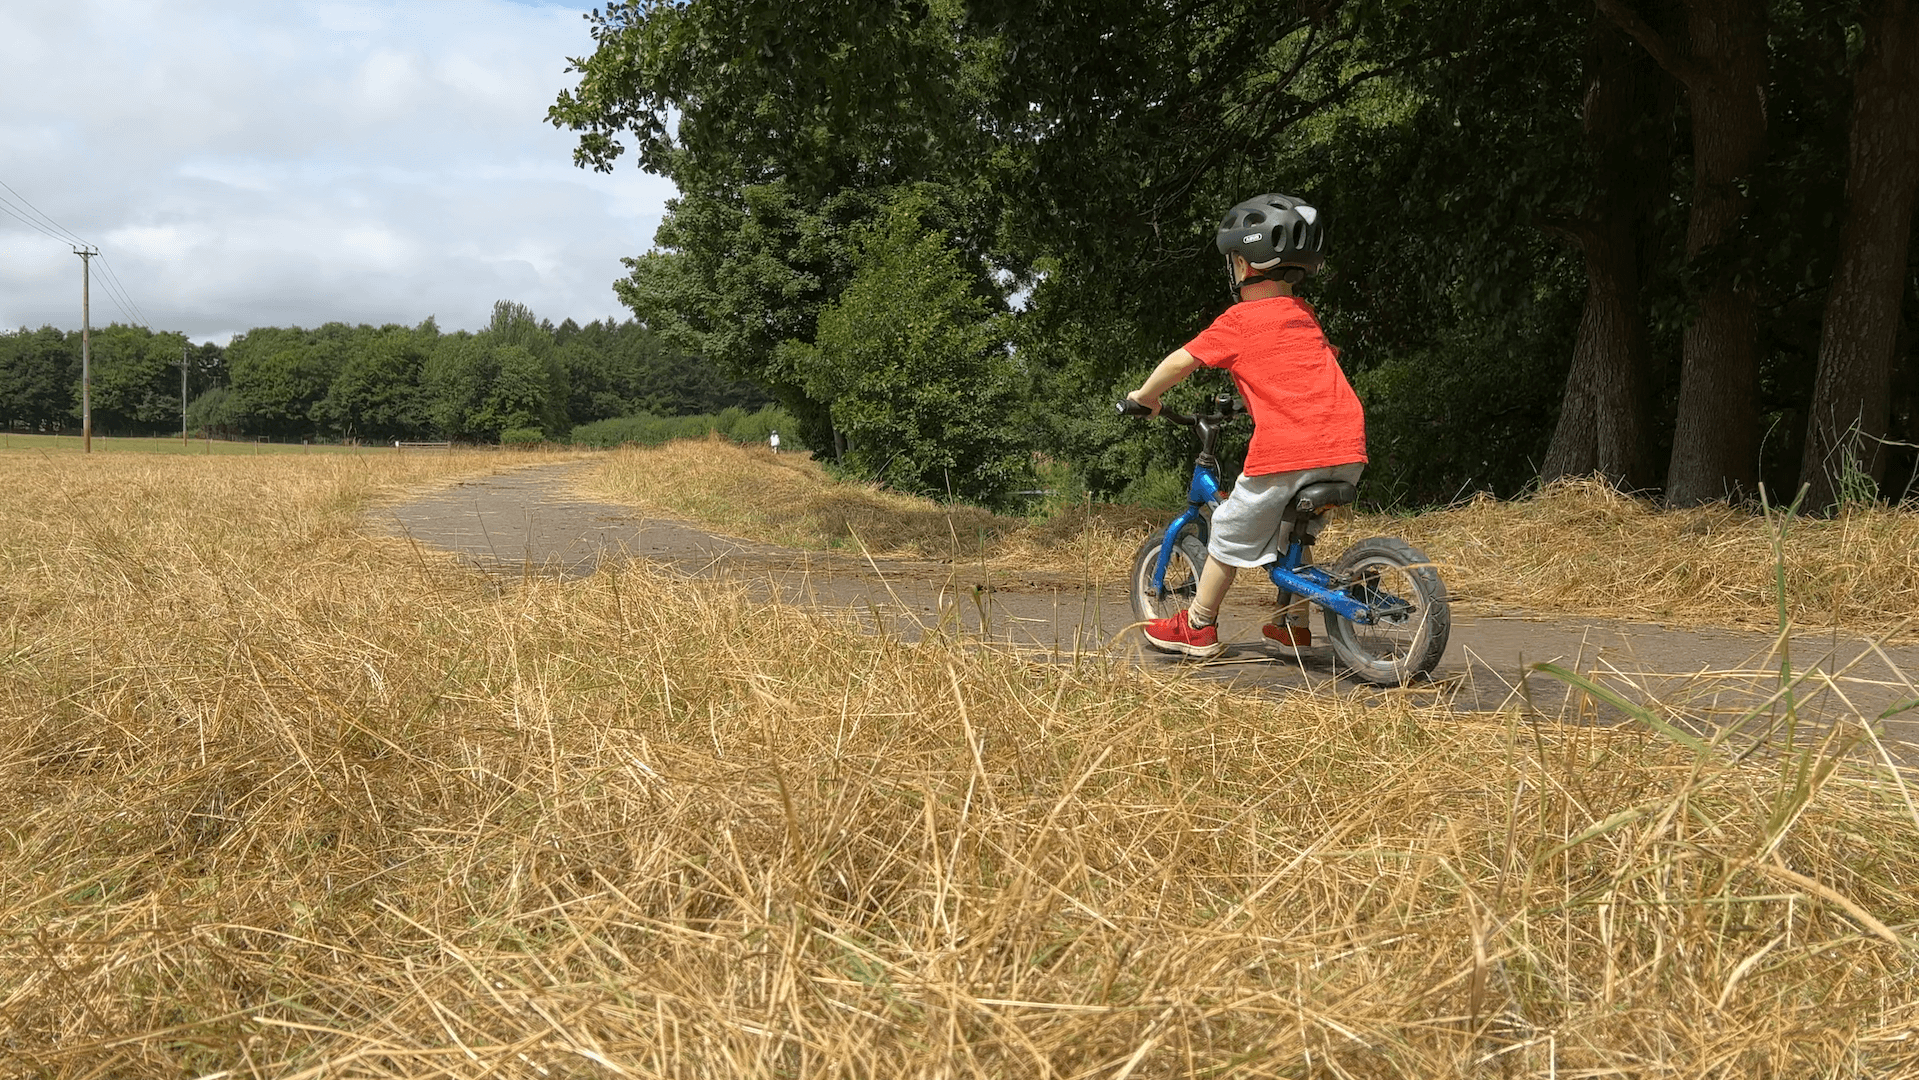 A child riding a balance bike